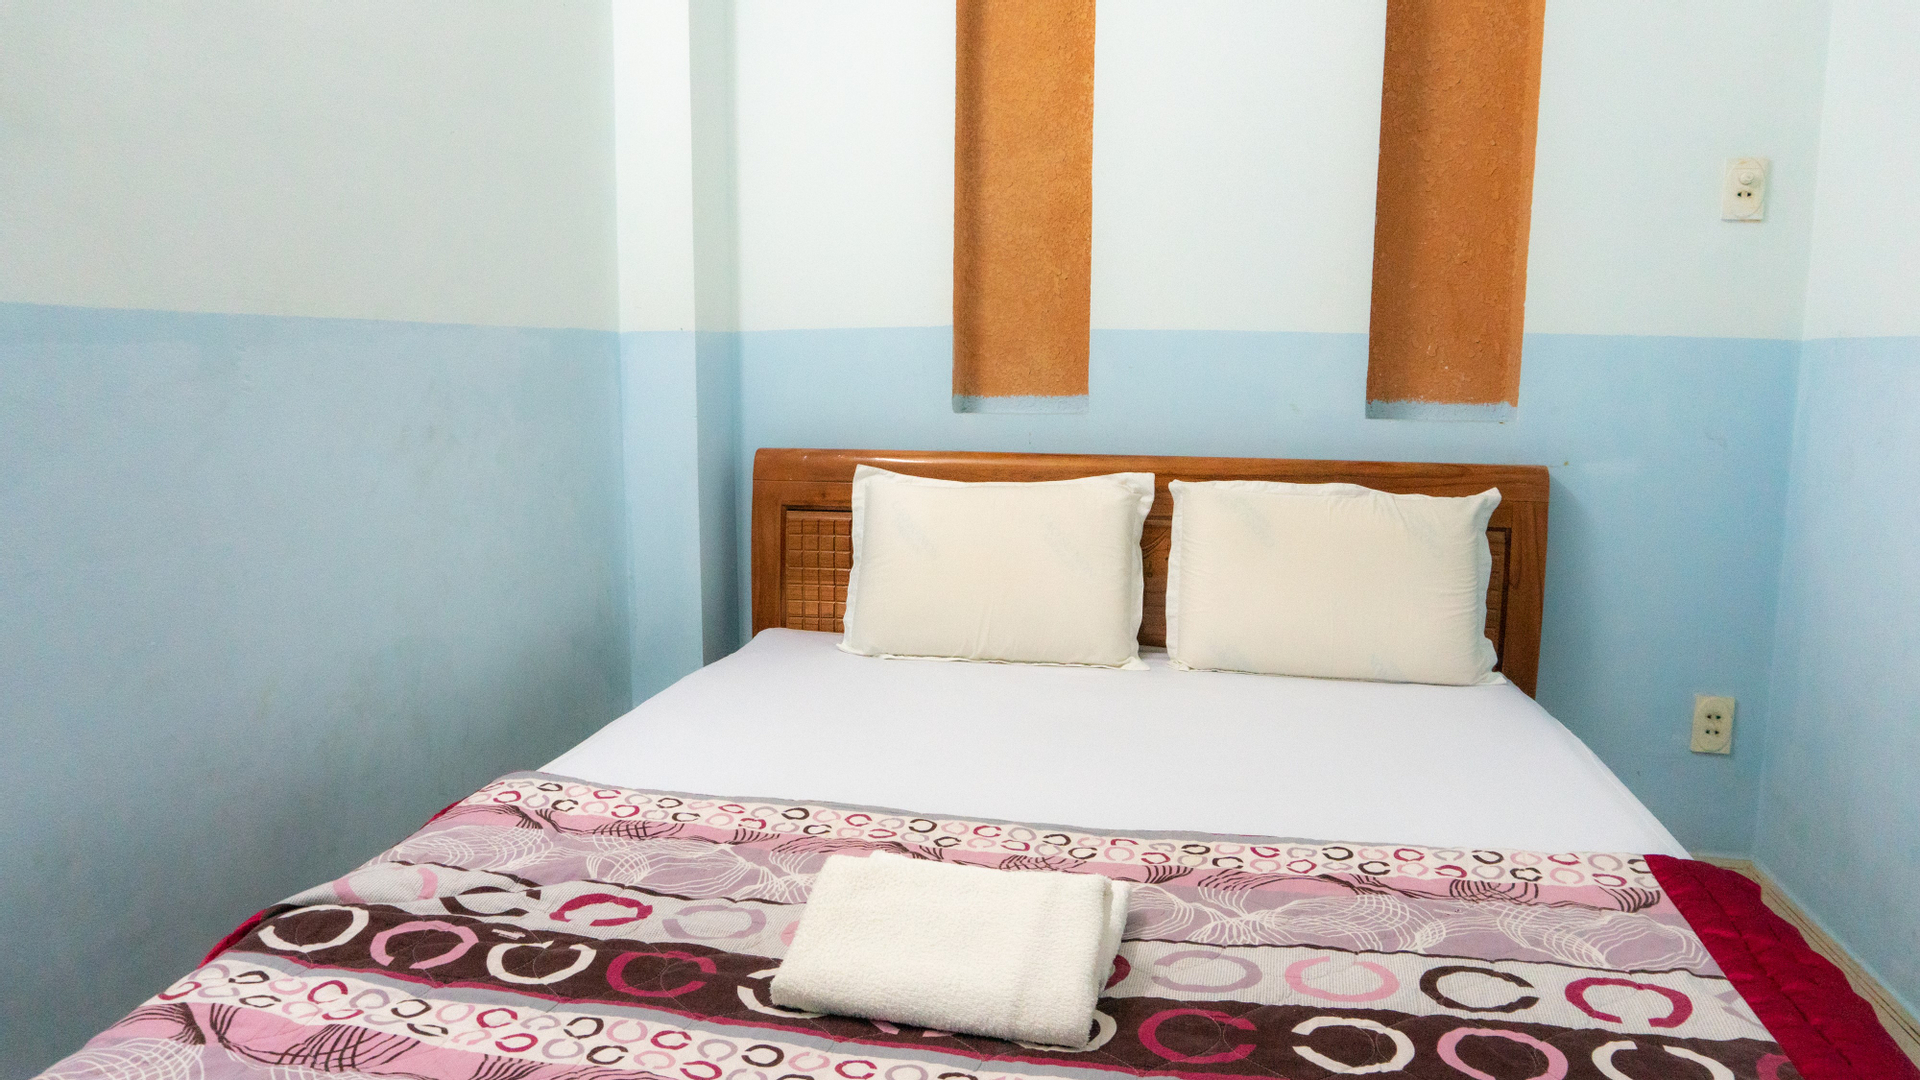 Bedroom 4, Viet Hung 8 Hotel, Binh Tan